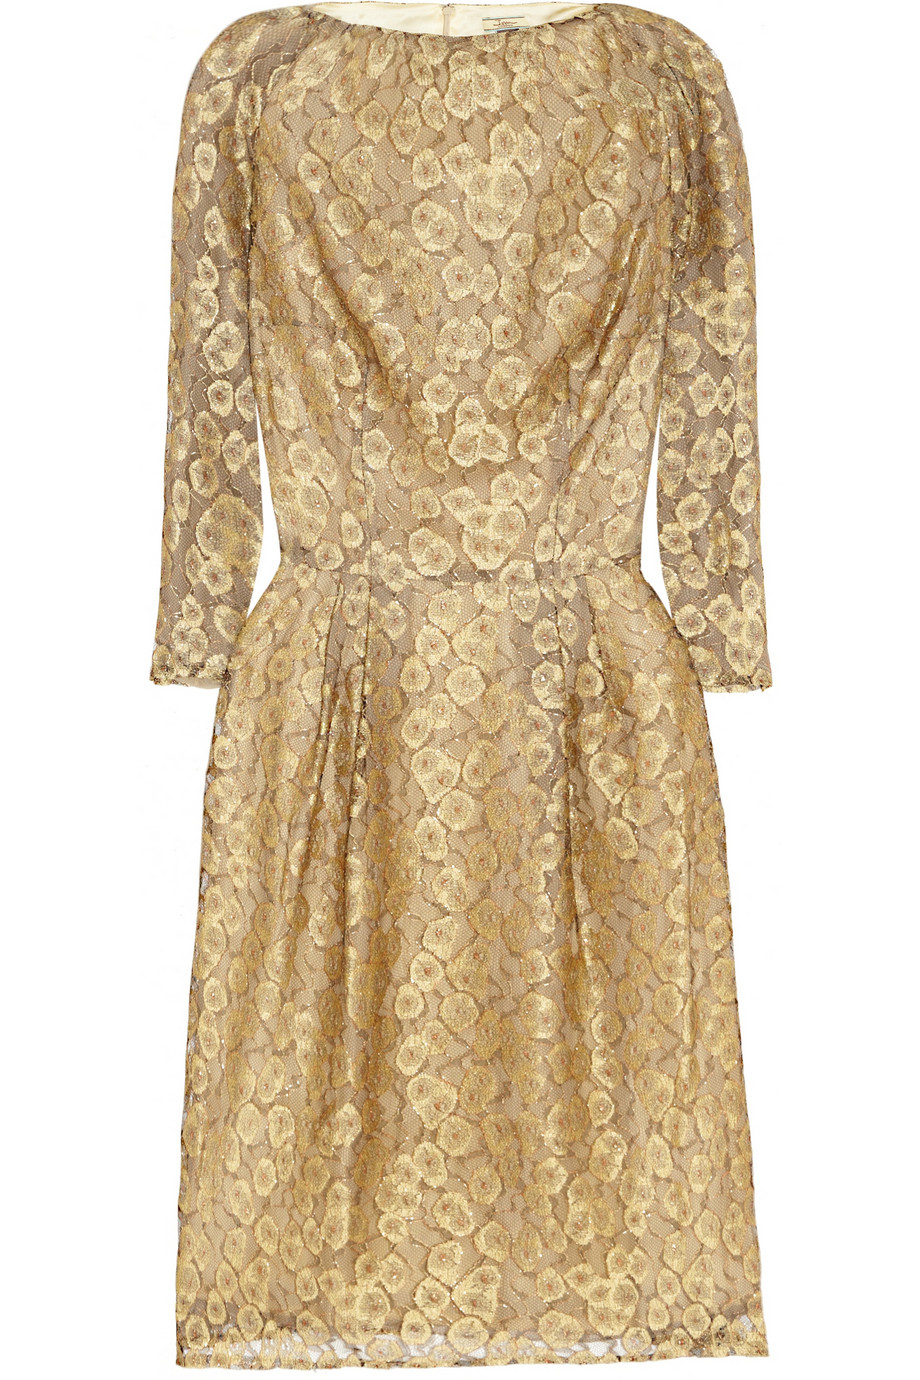 Issa Babushka Lace Dress in Gold | Lyst